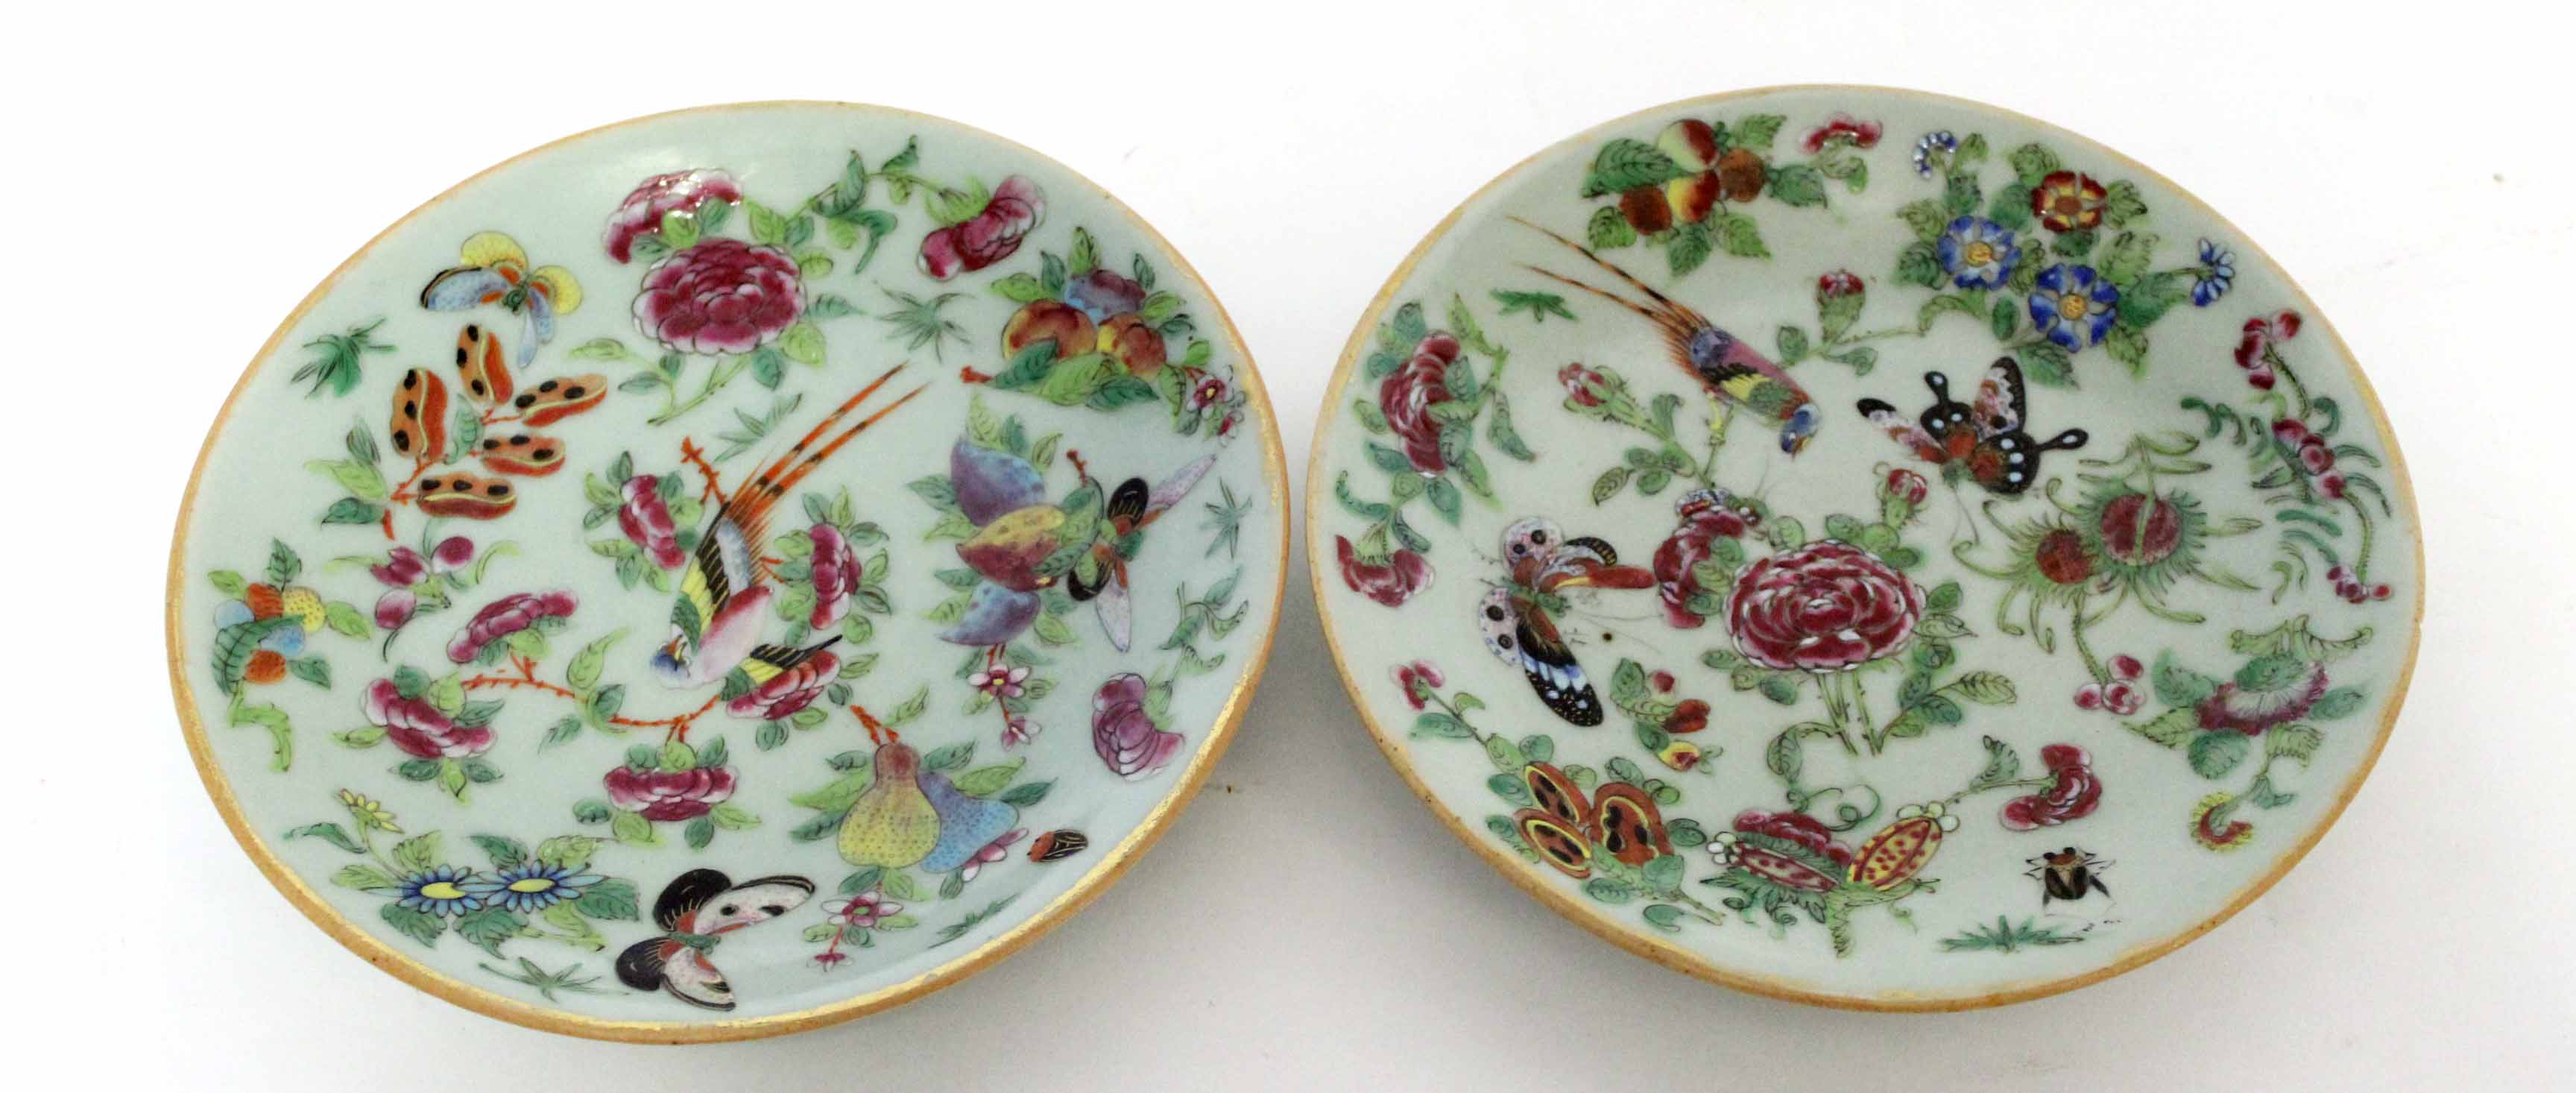 Pair of late 19th century Cantonese famille rose plates, 19cm diam - Image 3 of 3